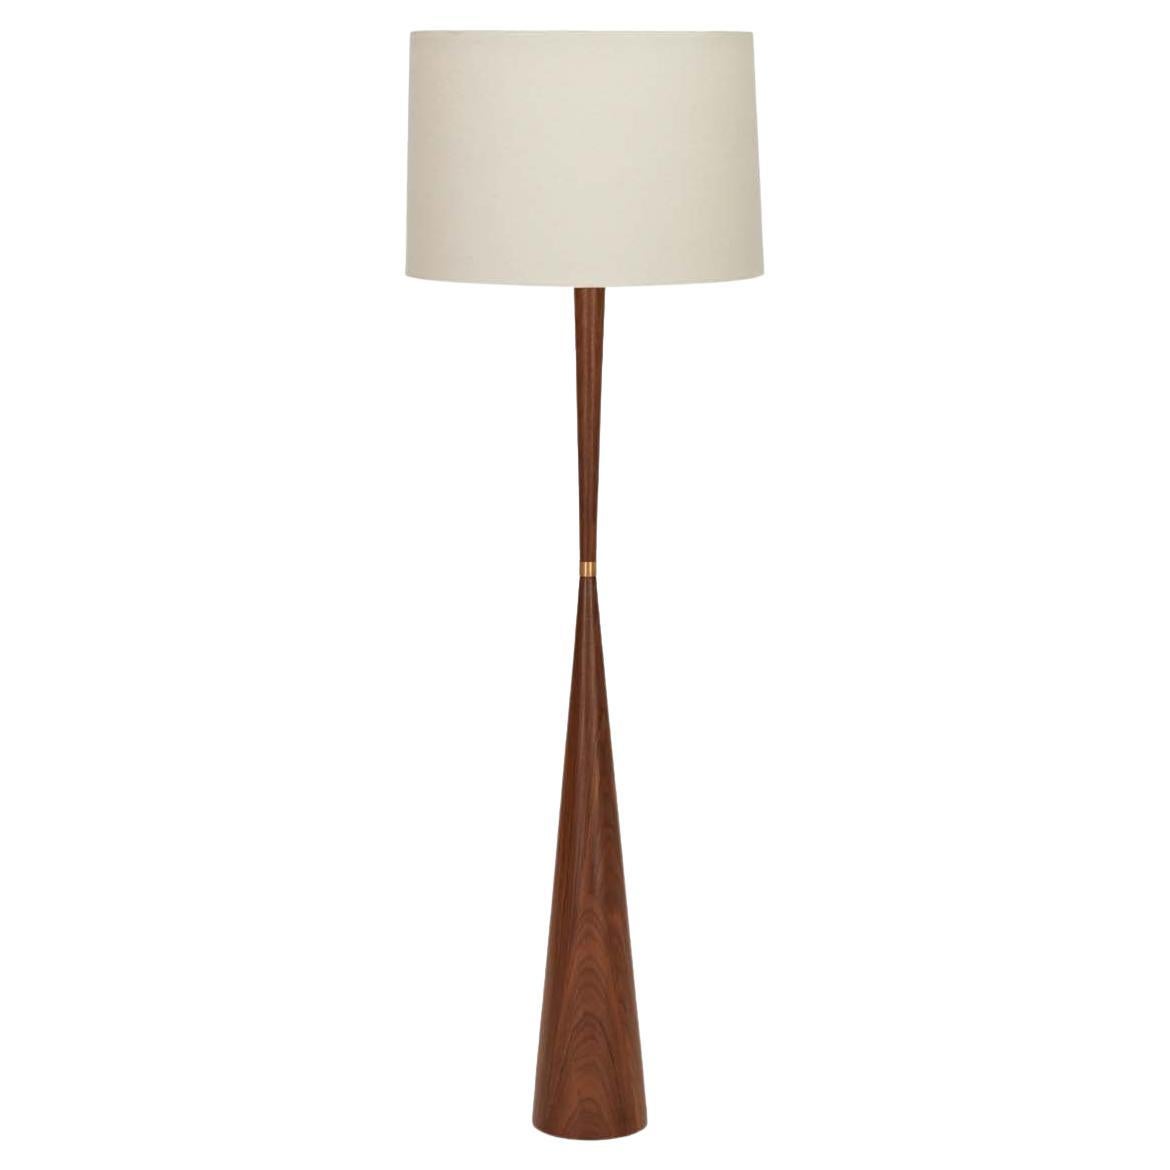 El Monte Lamp by Lawson-Fenning For Sale